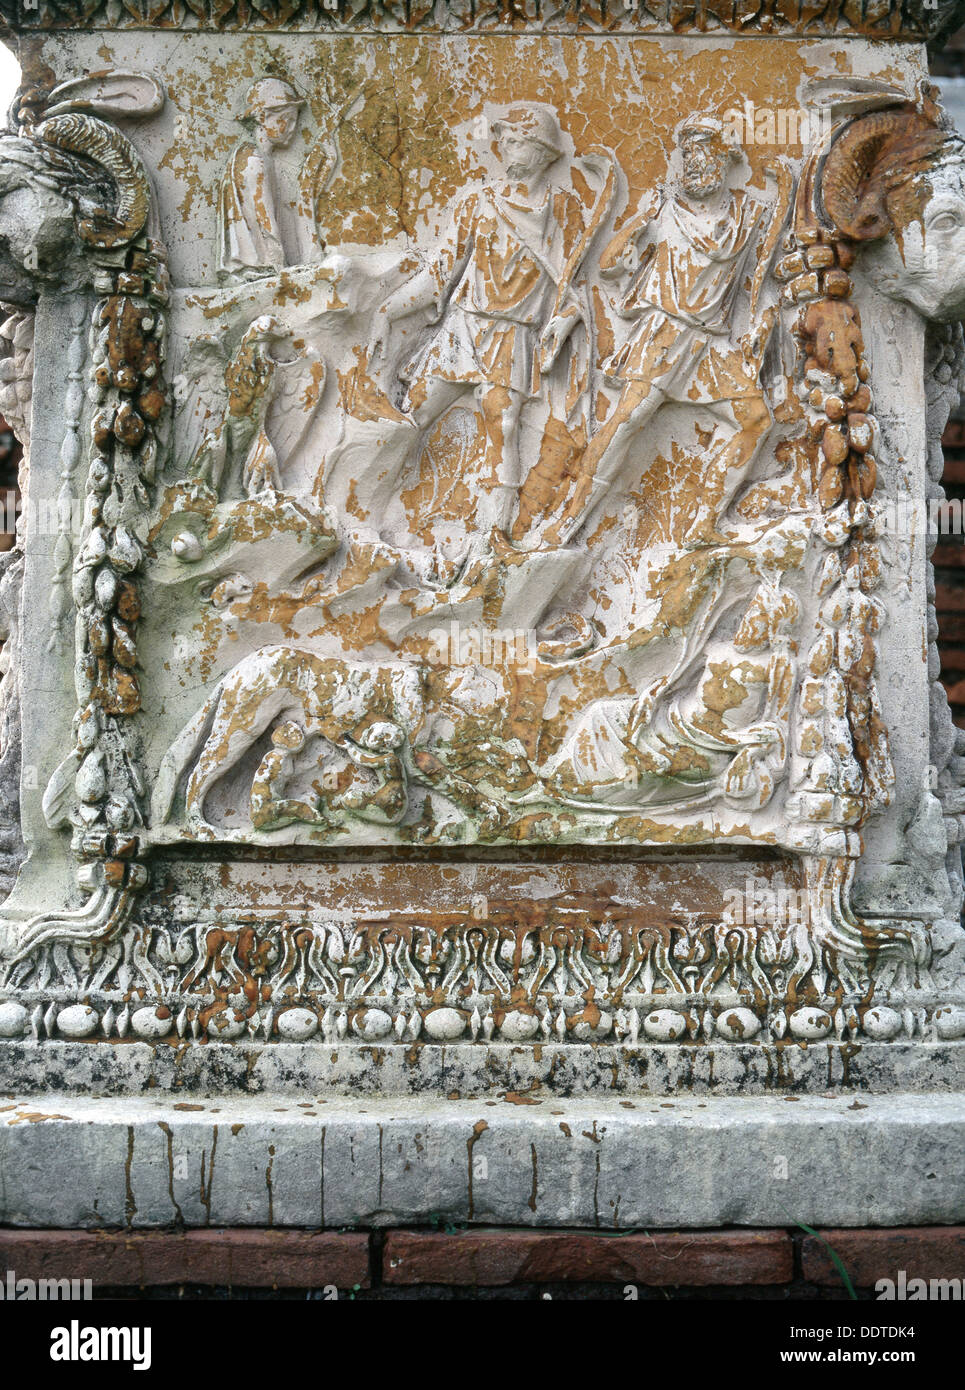 Roman marble altar, Ostia, Italy. Artist: Werner Forman Stock Photo